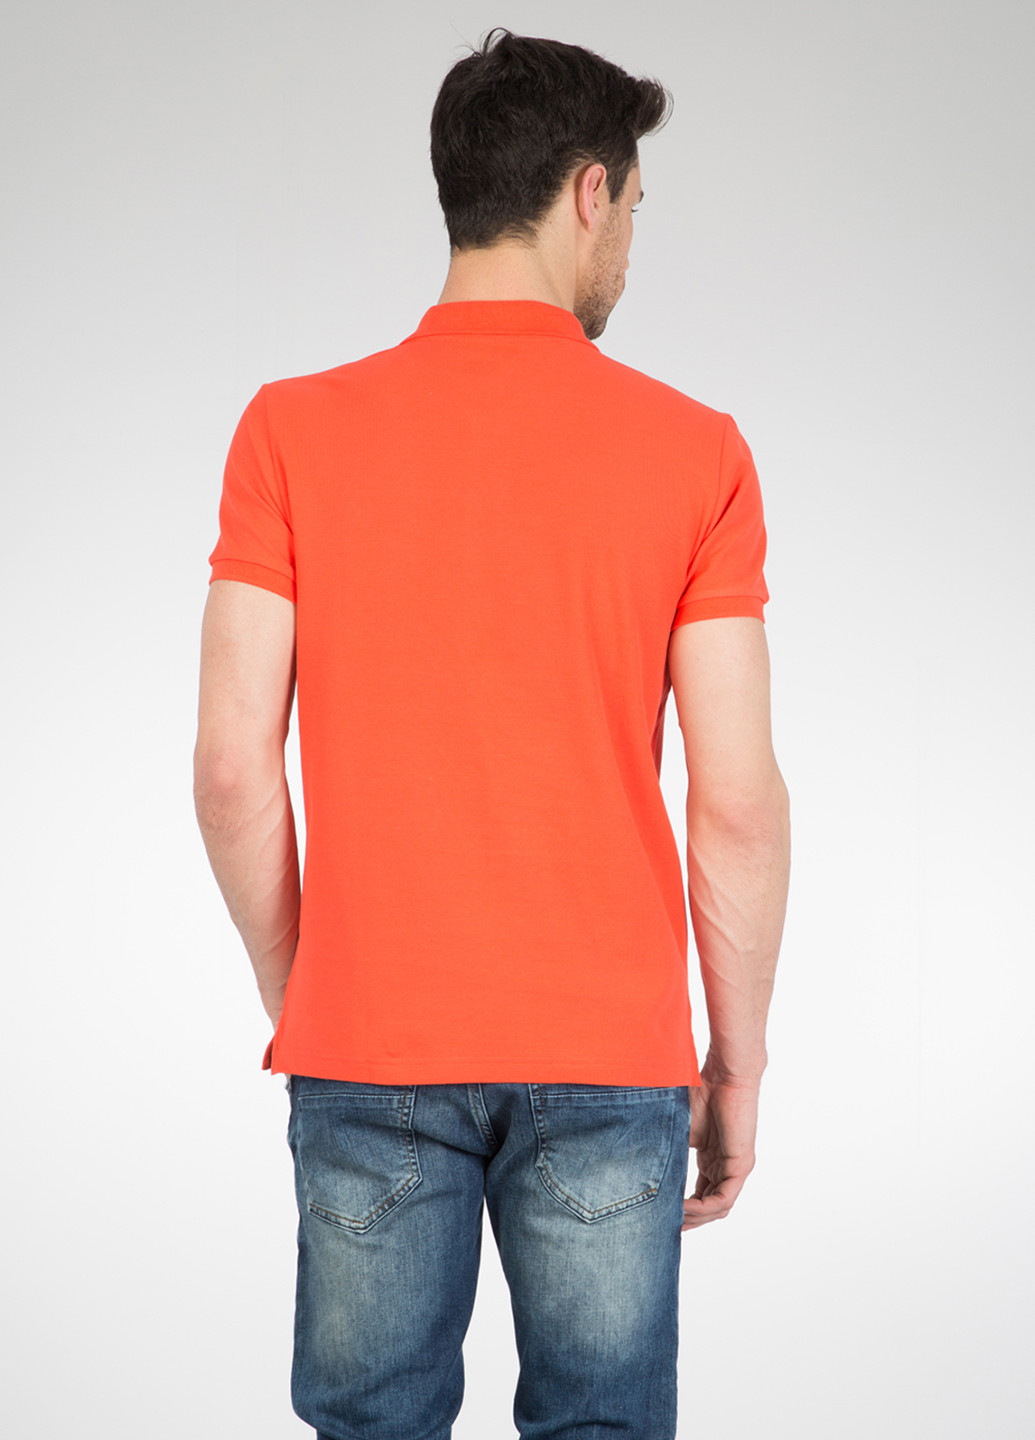 Оранжевая футболка-поло для мужчин Colin's однотонная